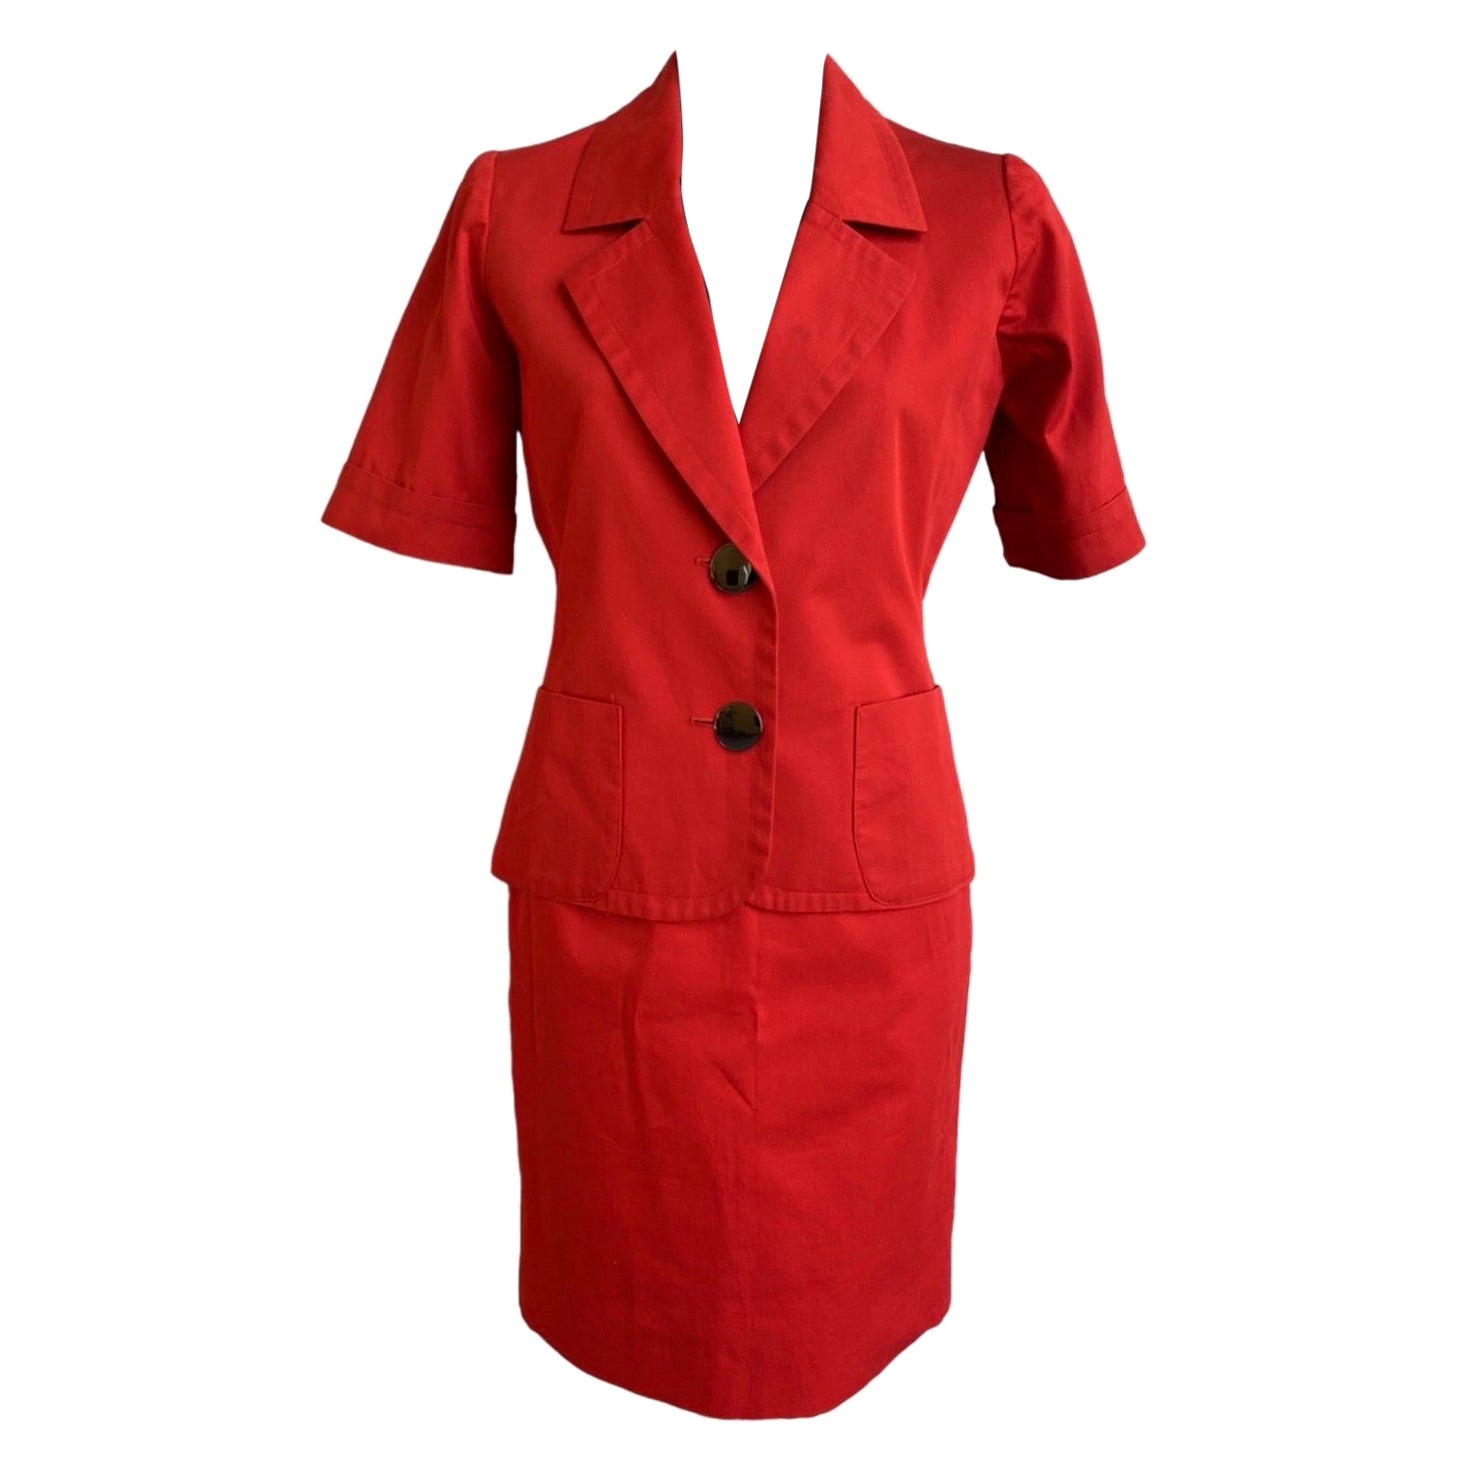 Yves Saint Laurent Vintage red Suit For Sale